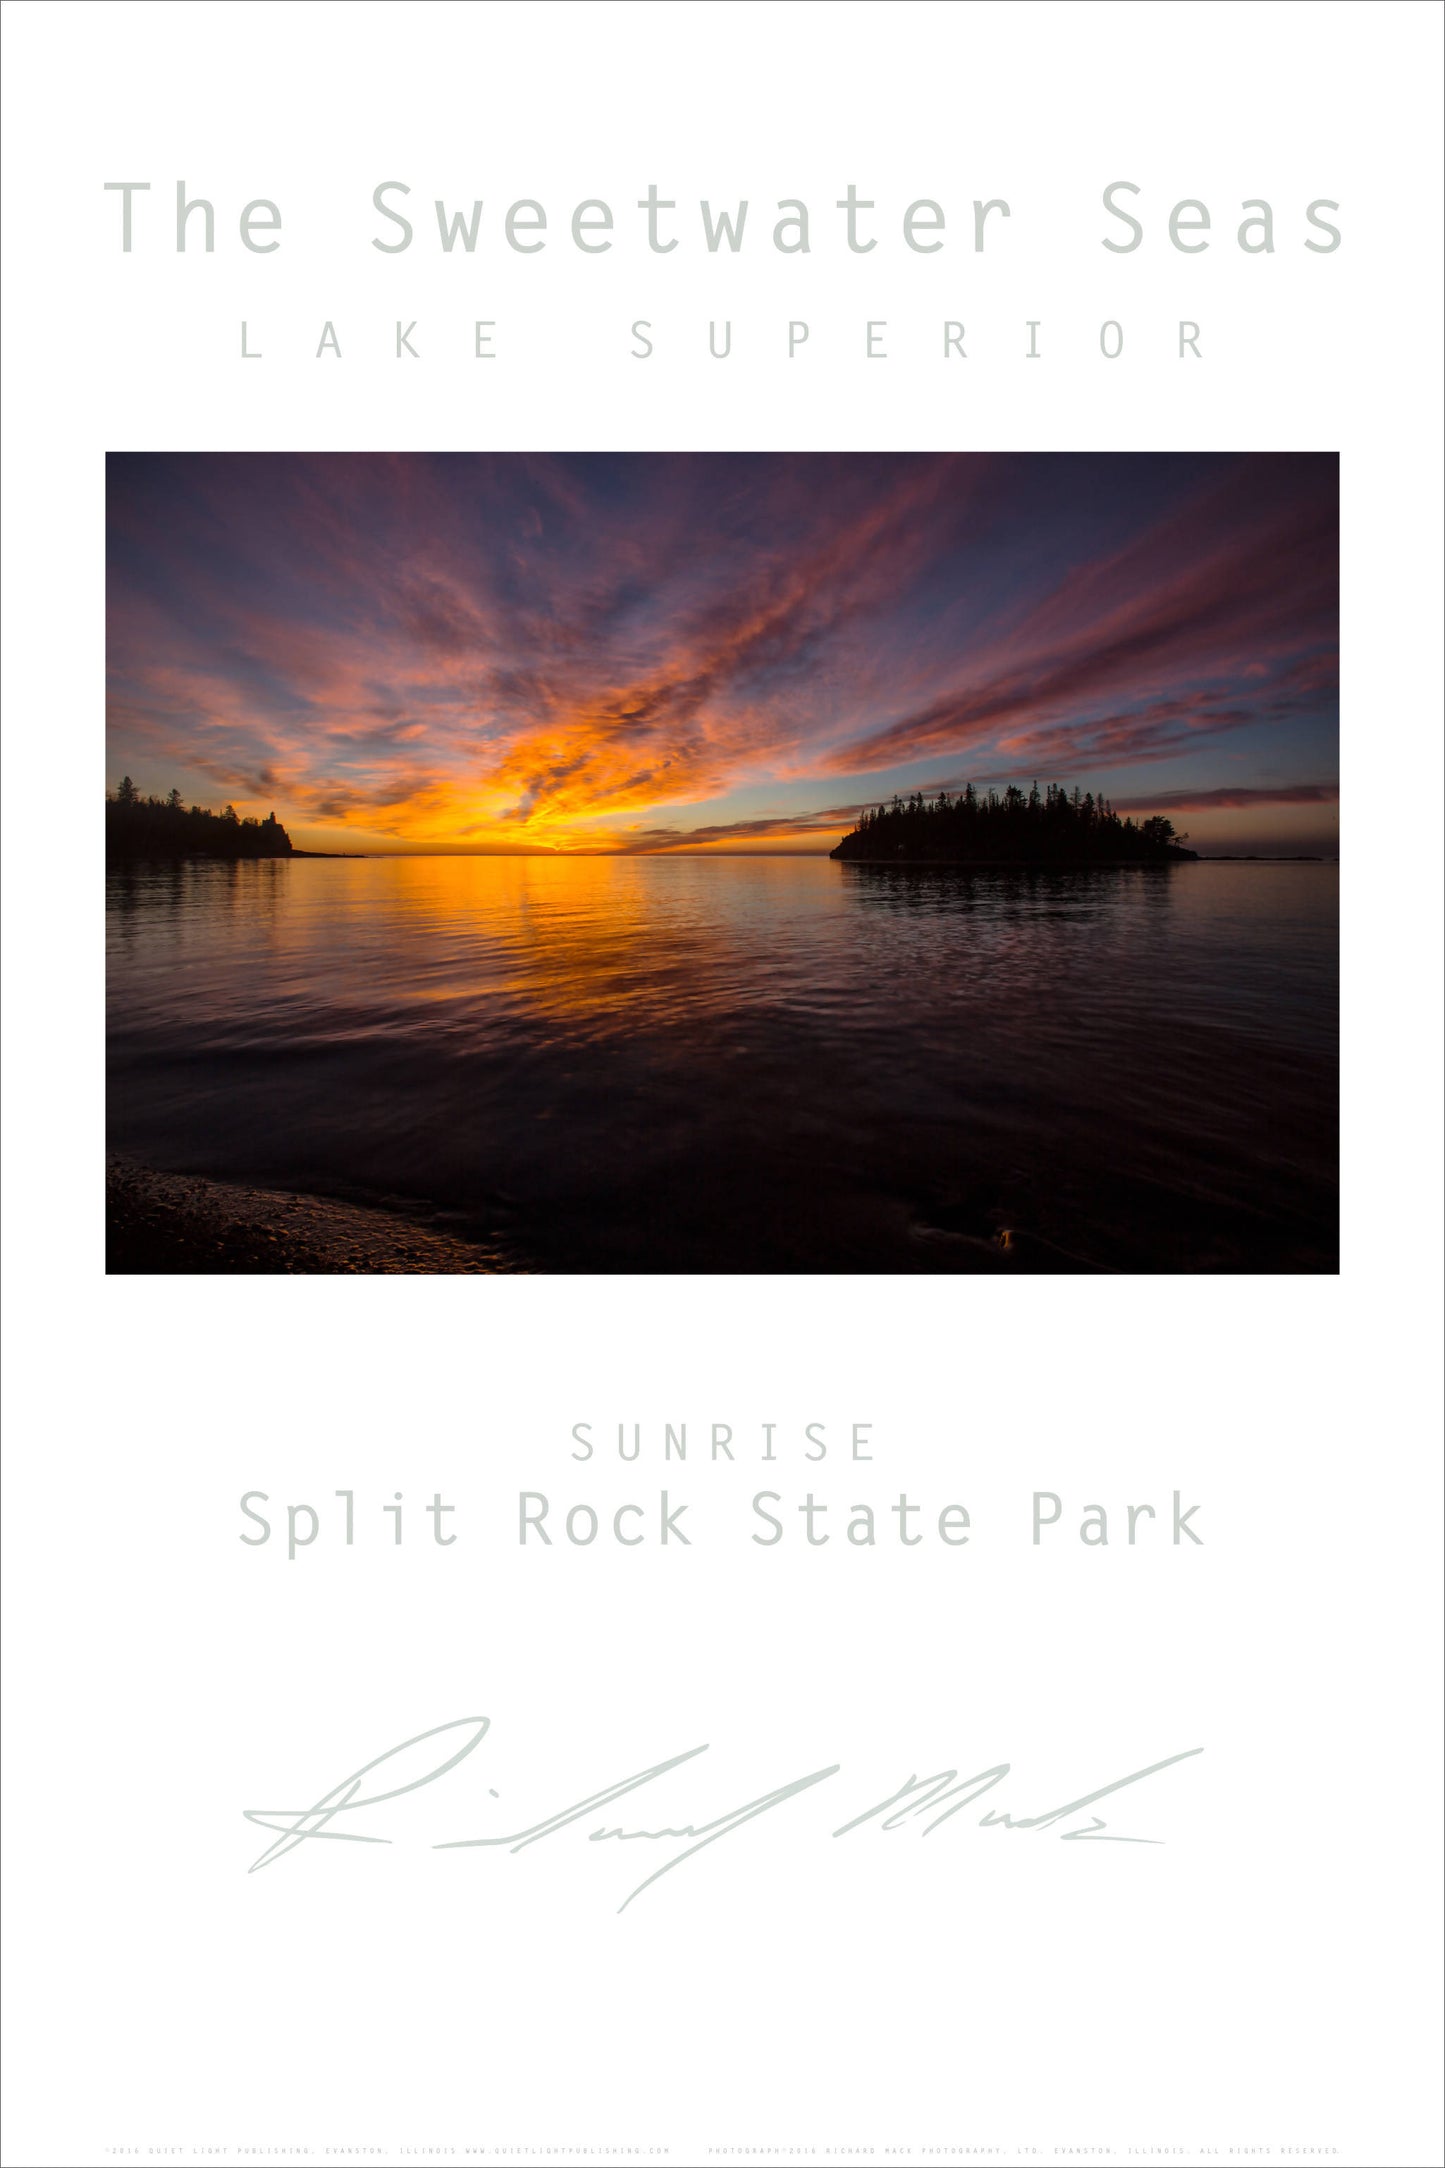 Sweetwater Seas Fine Art Poster - Lake Superior, Sunrise, Split Rock S.P.